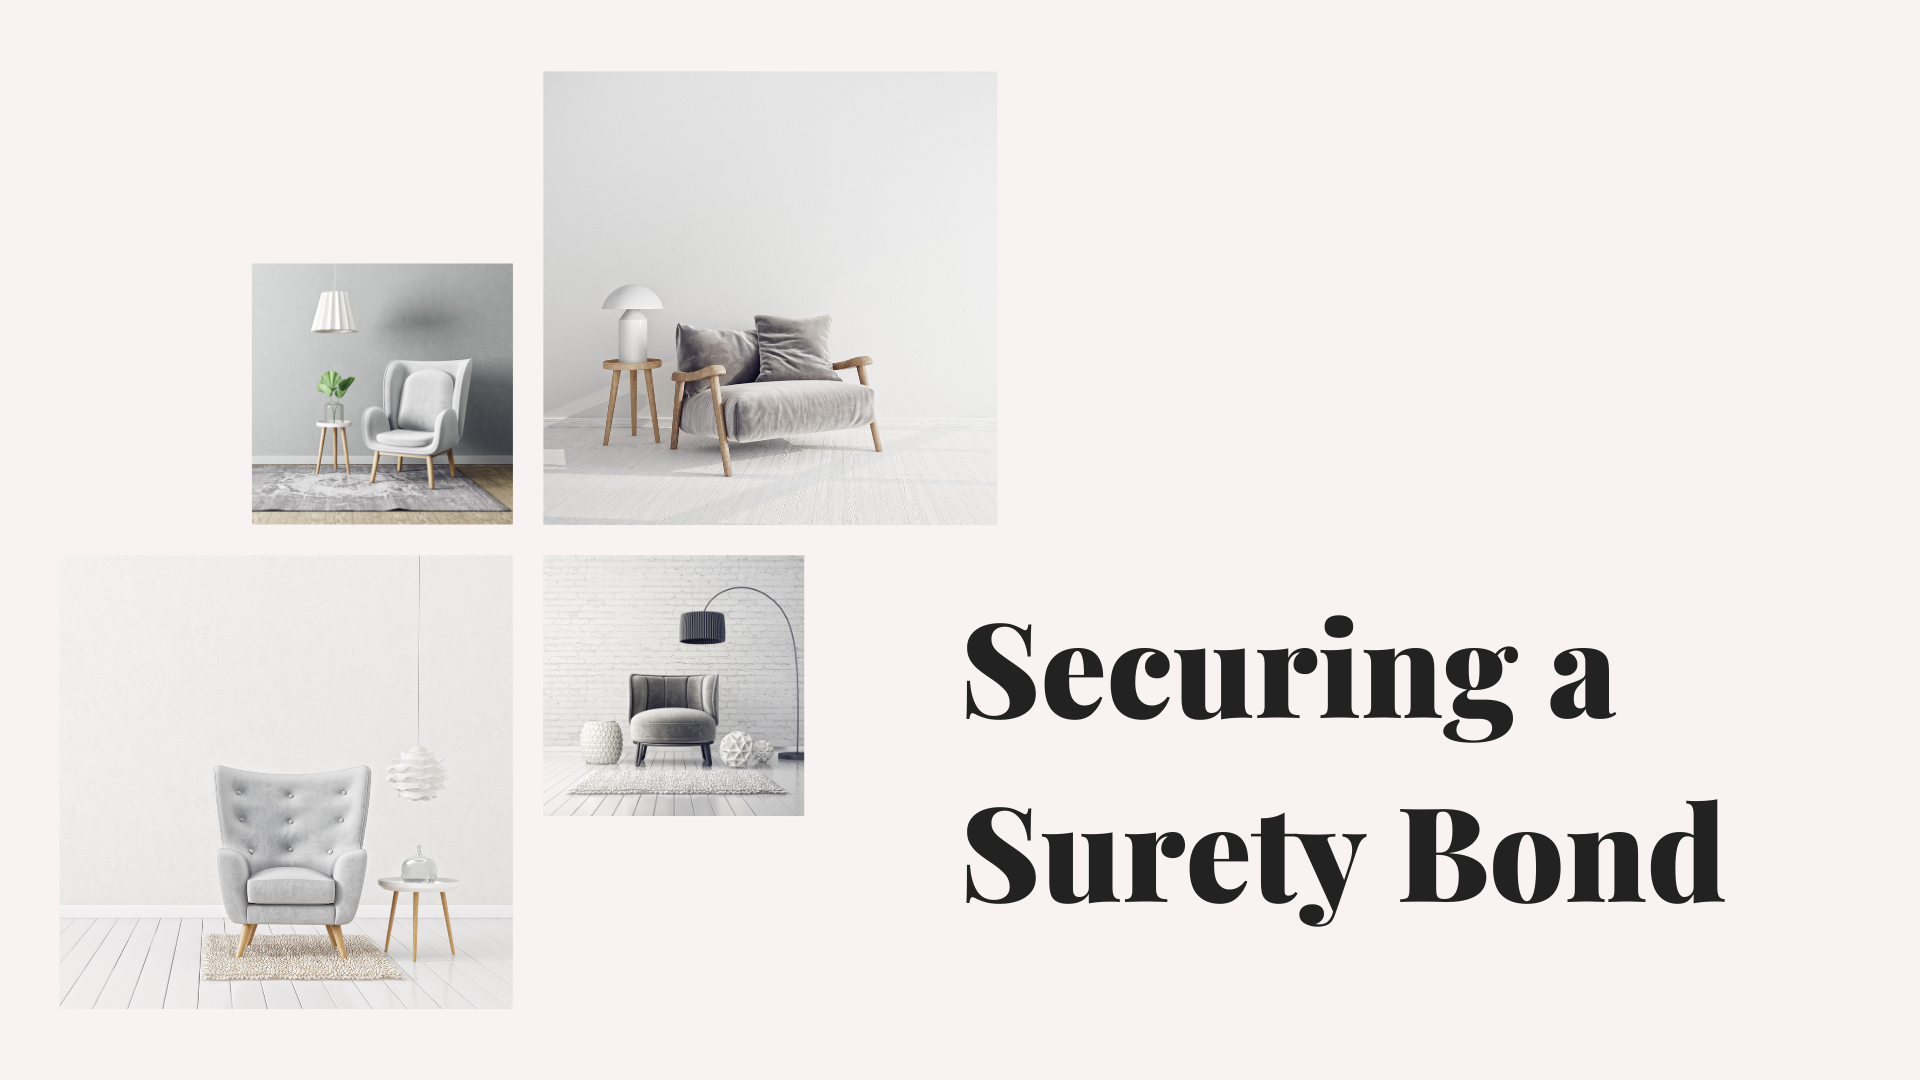 surety bond - How can I get a surety bond - types of sofa